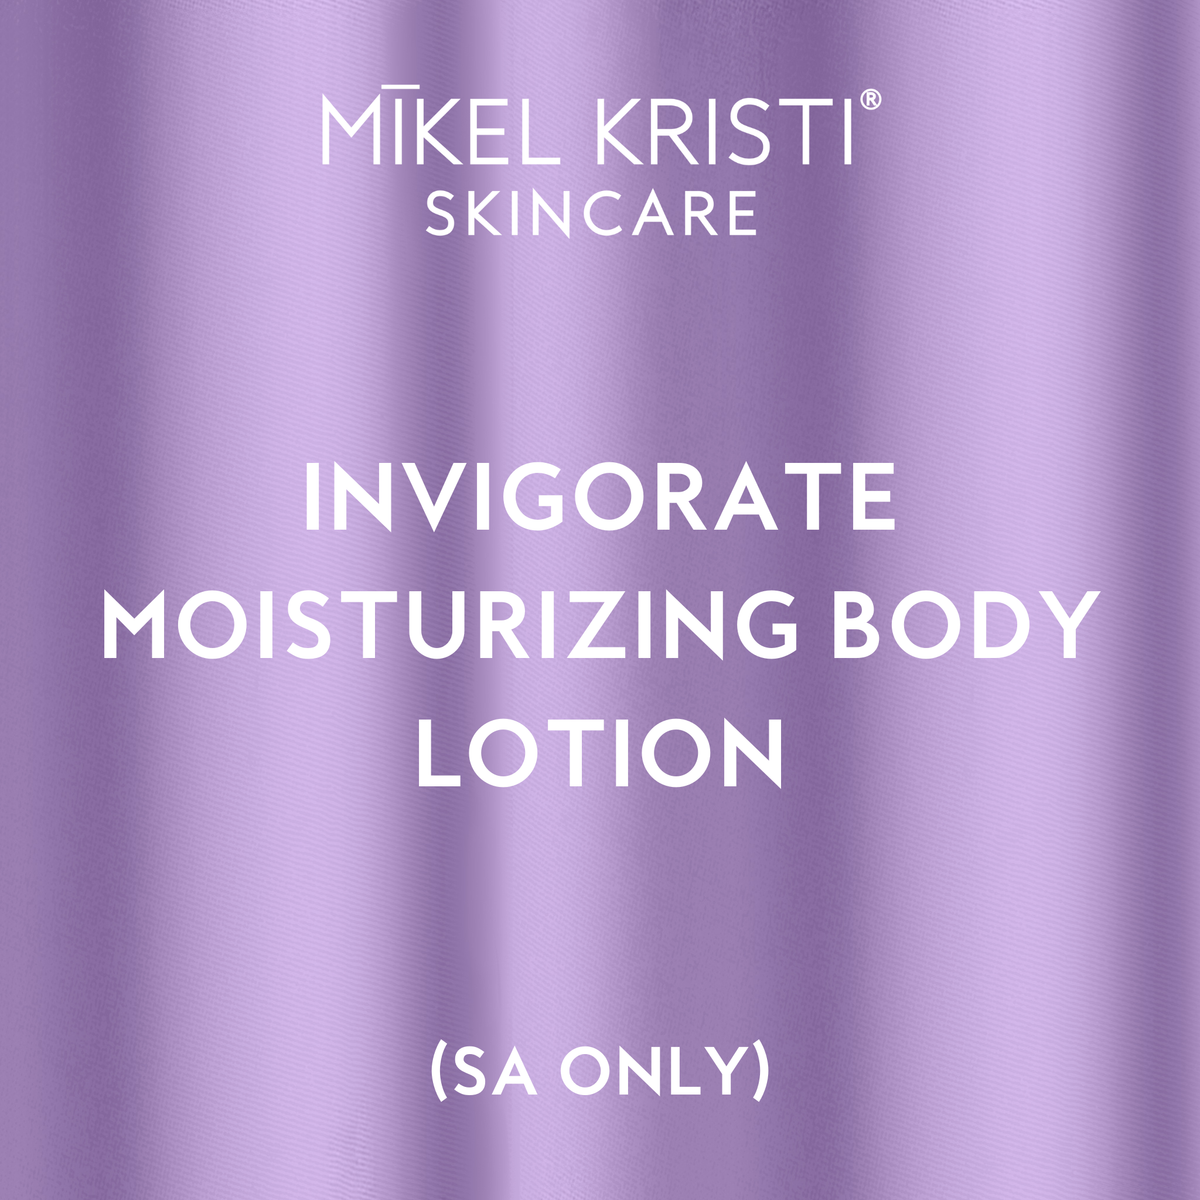 Mikel Kristi Back Bar Invigorate Moisturizing Body Lotion